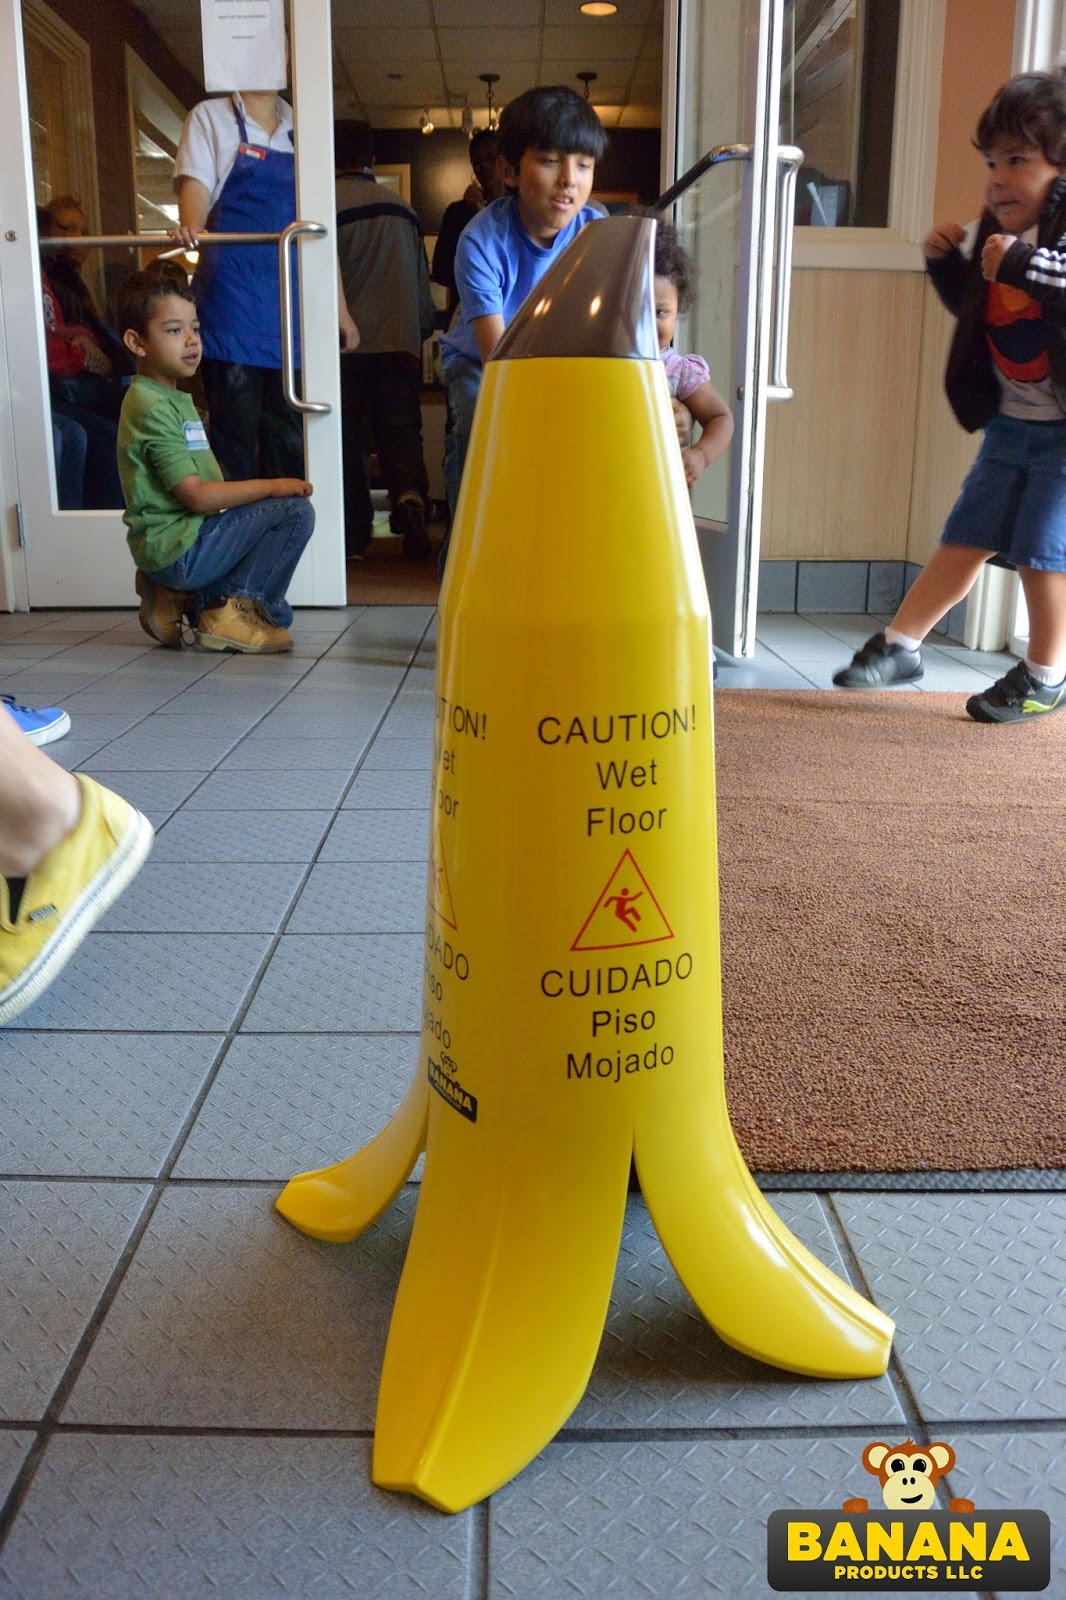 Wet Floor Sign: Wet Floor Signs shaped like Banana Peels